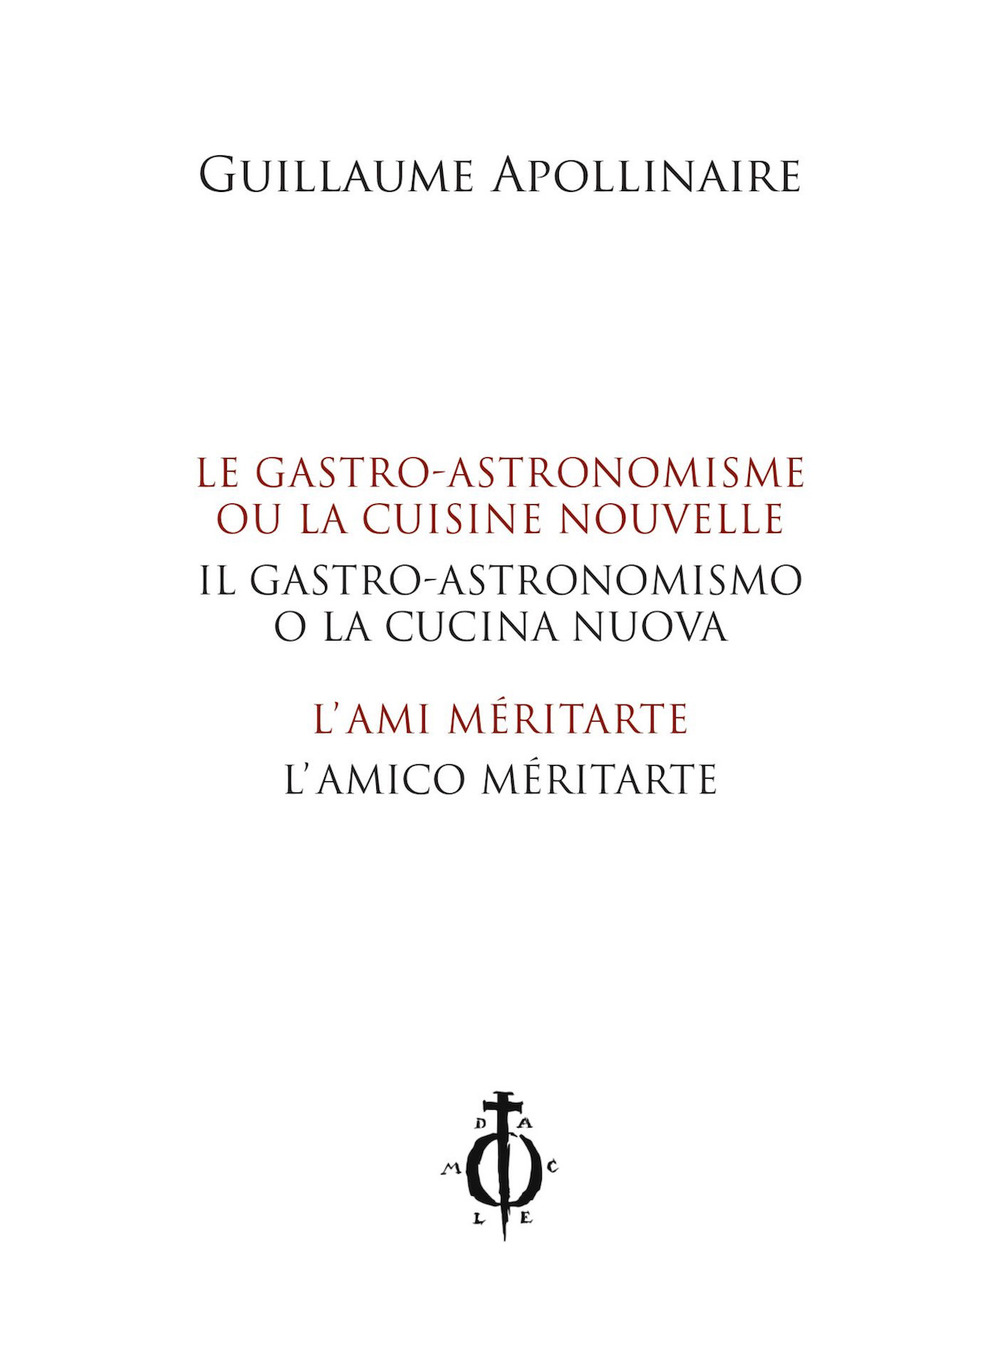 Il gastro-astronomismo o la cucina nuova, L'amico méritarte-Le gastro-astronomisme ou la cuisine nouvelle, L'ami méritarte. Ediz. bilingue